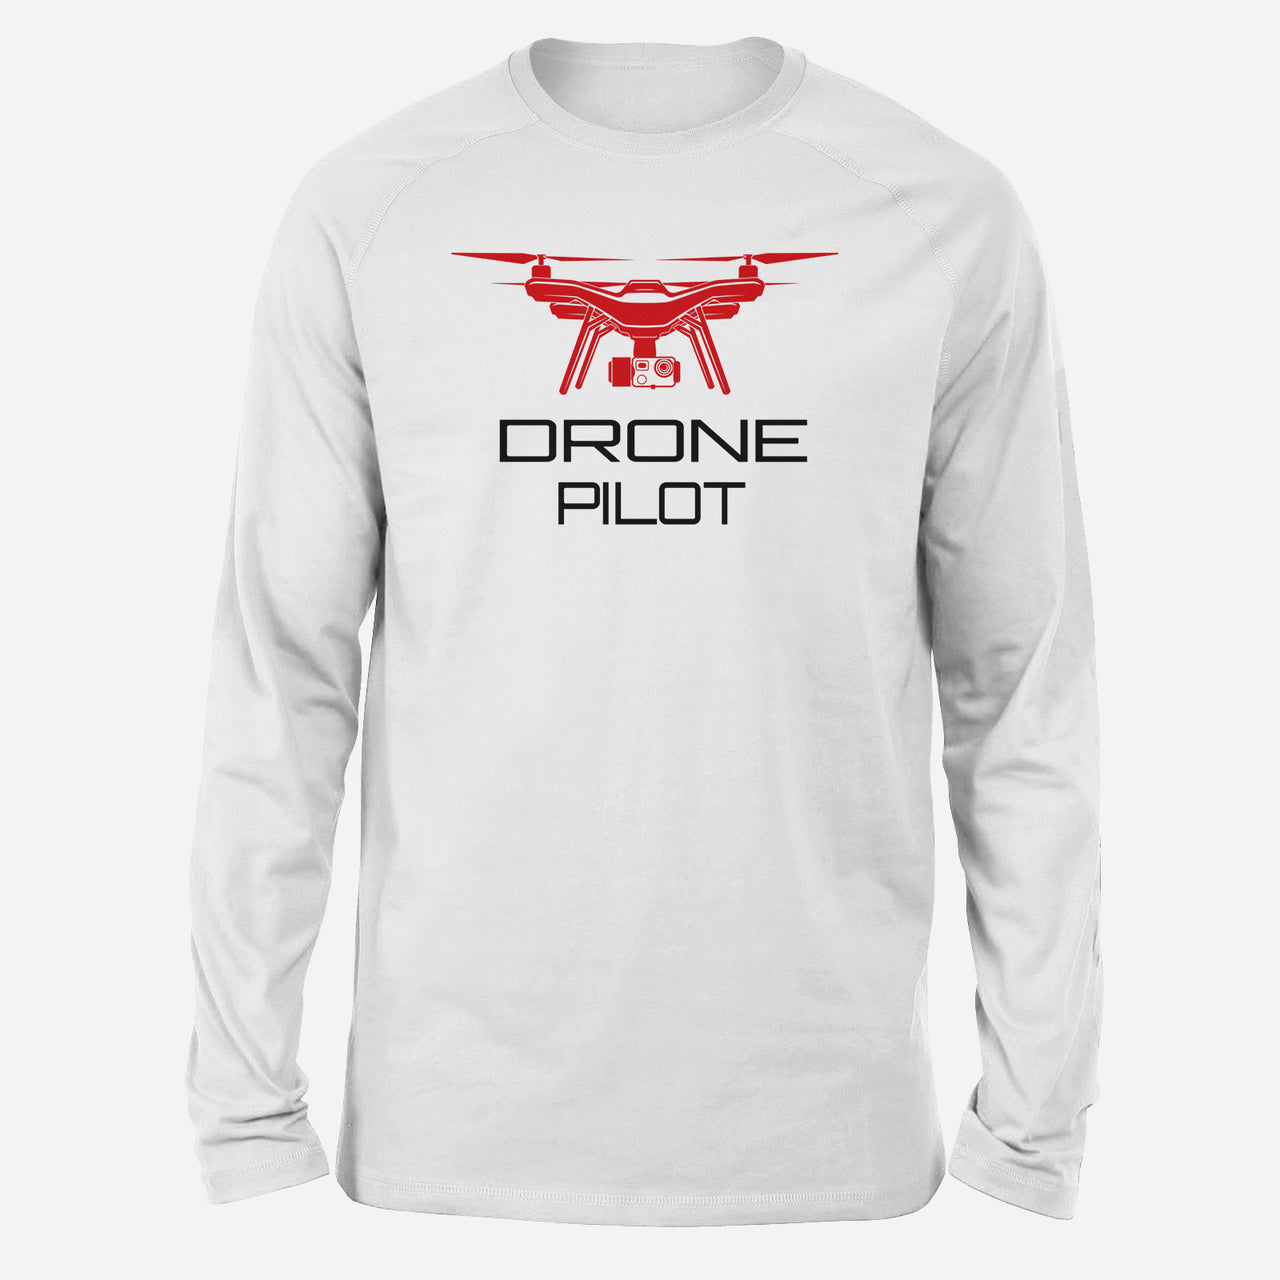 Drone Pilot Designed Long-Sleeve T-Shirts